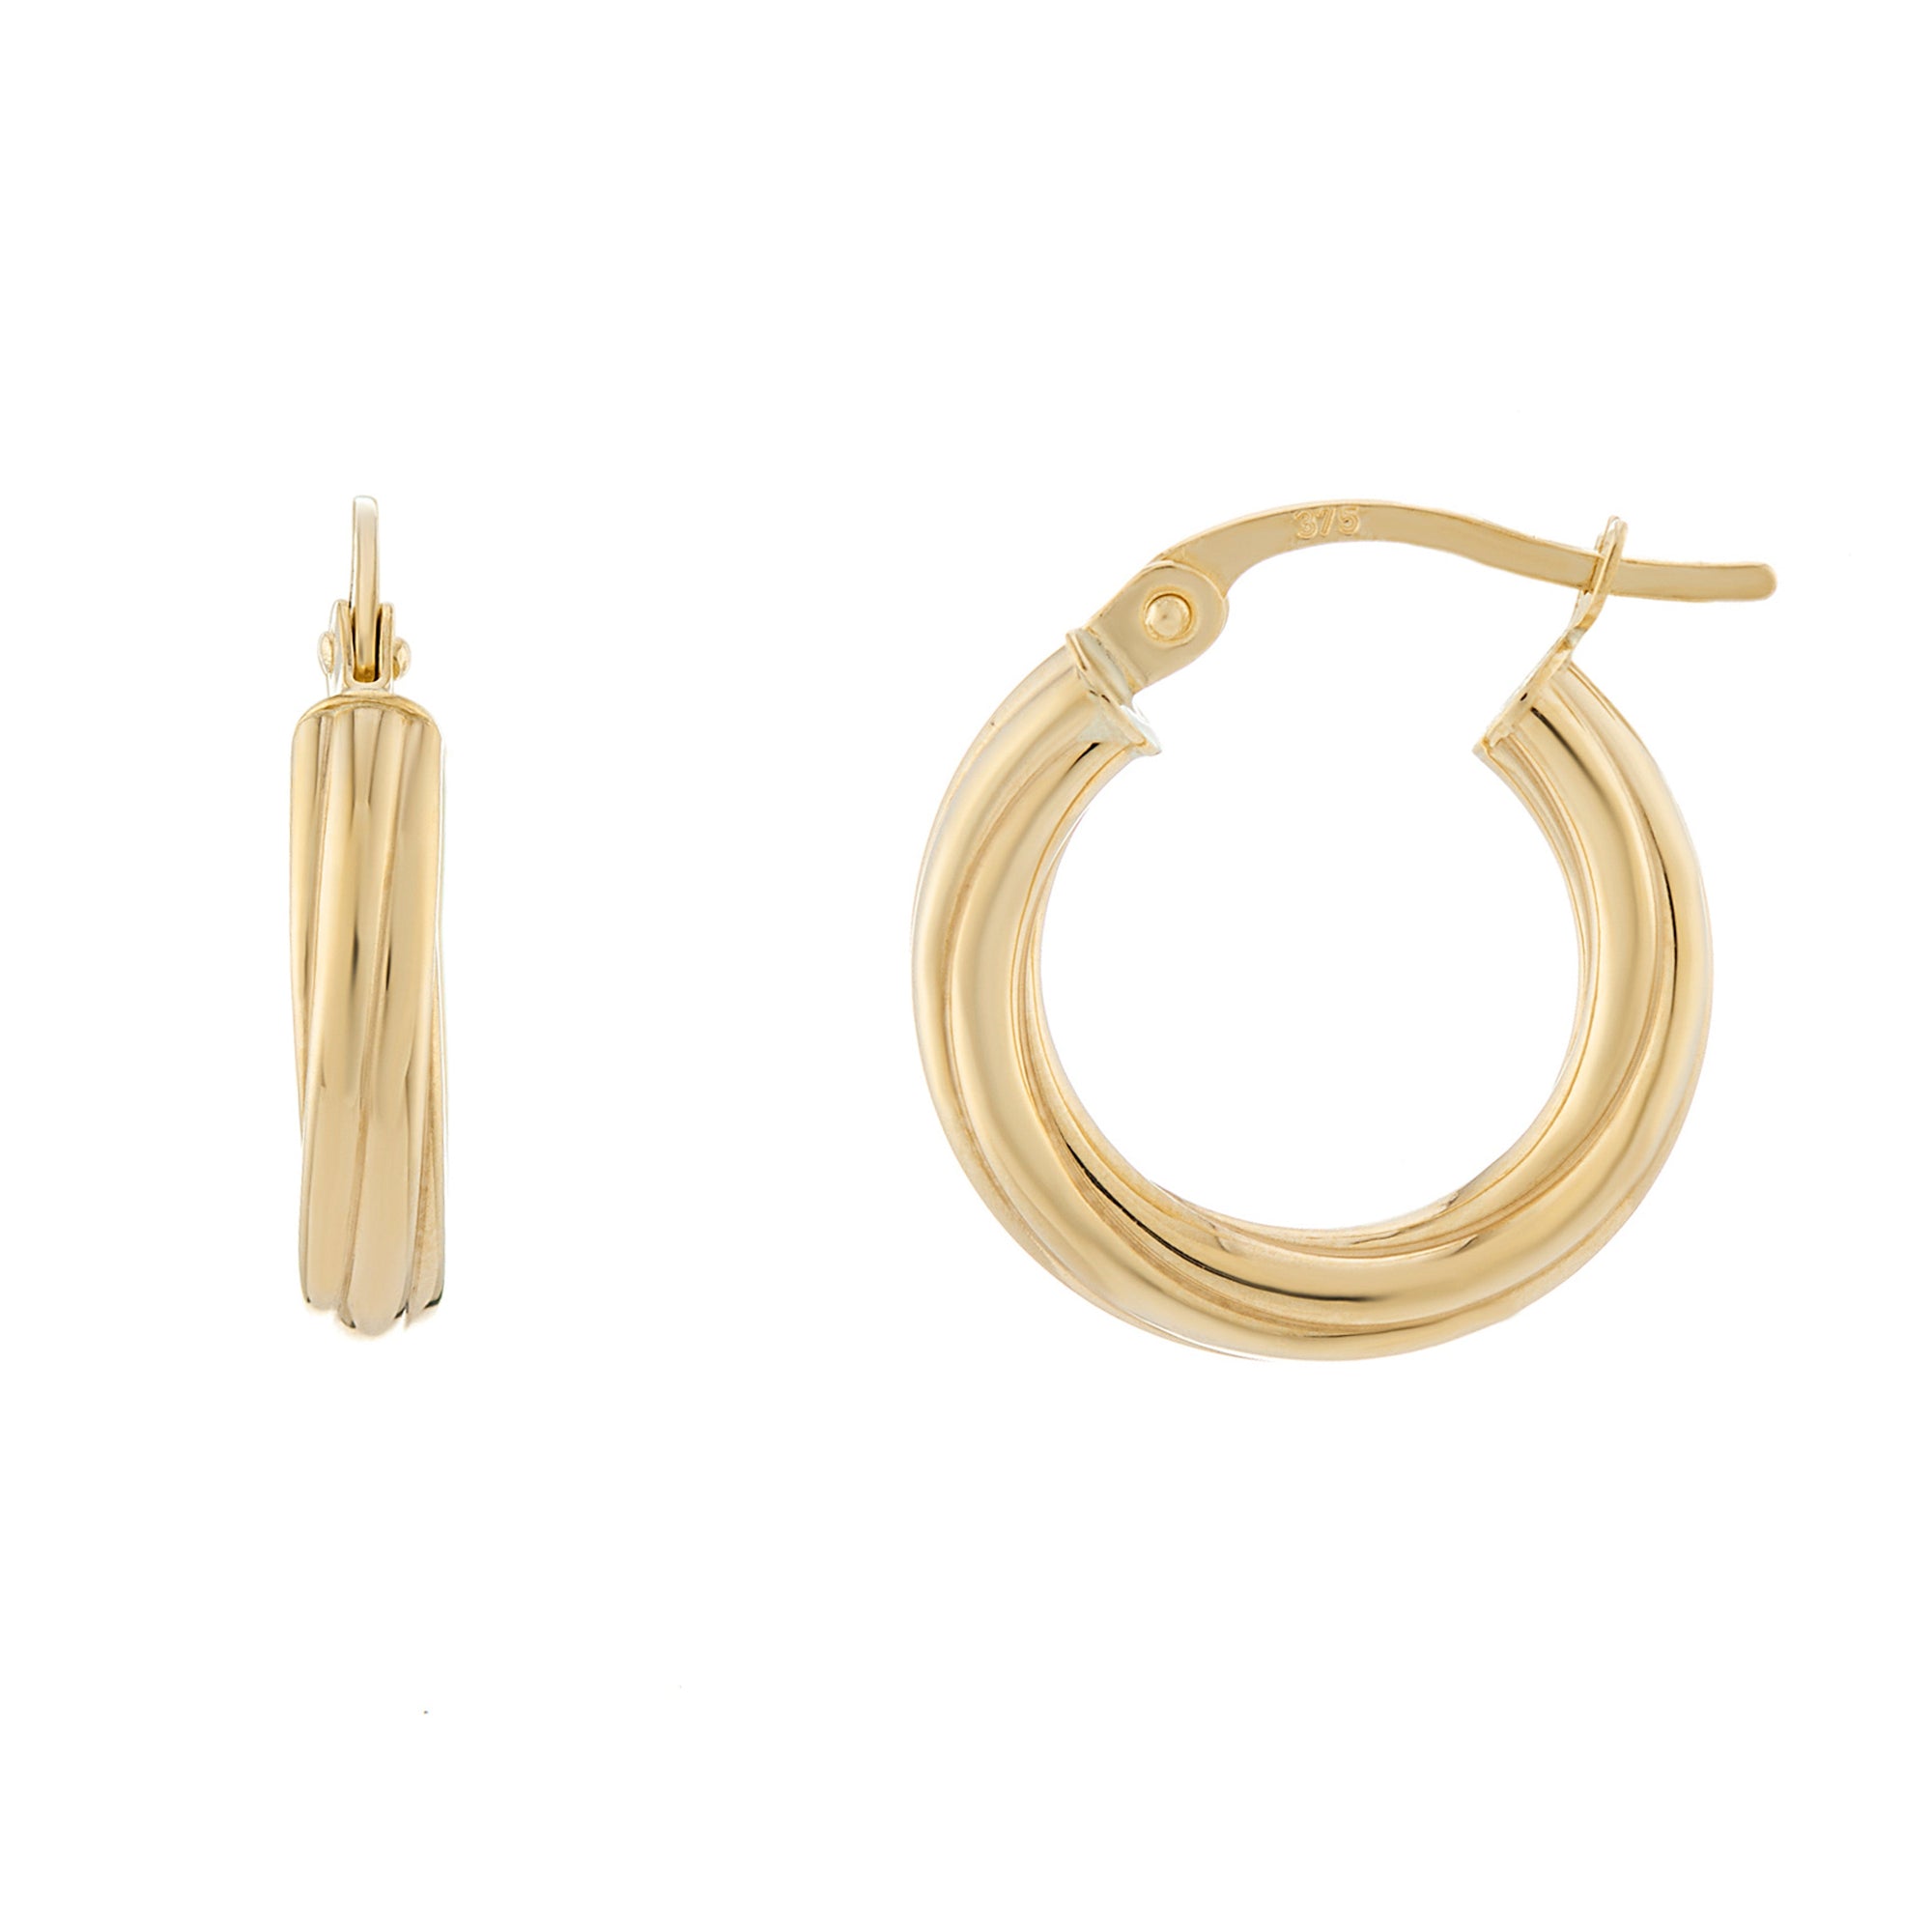 9ct gold 3mm x 10mm twisted hoop earrings